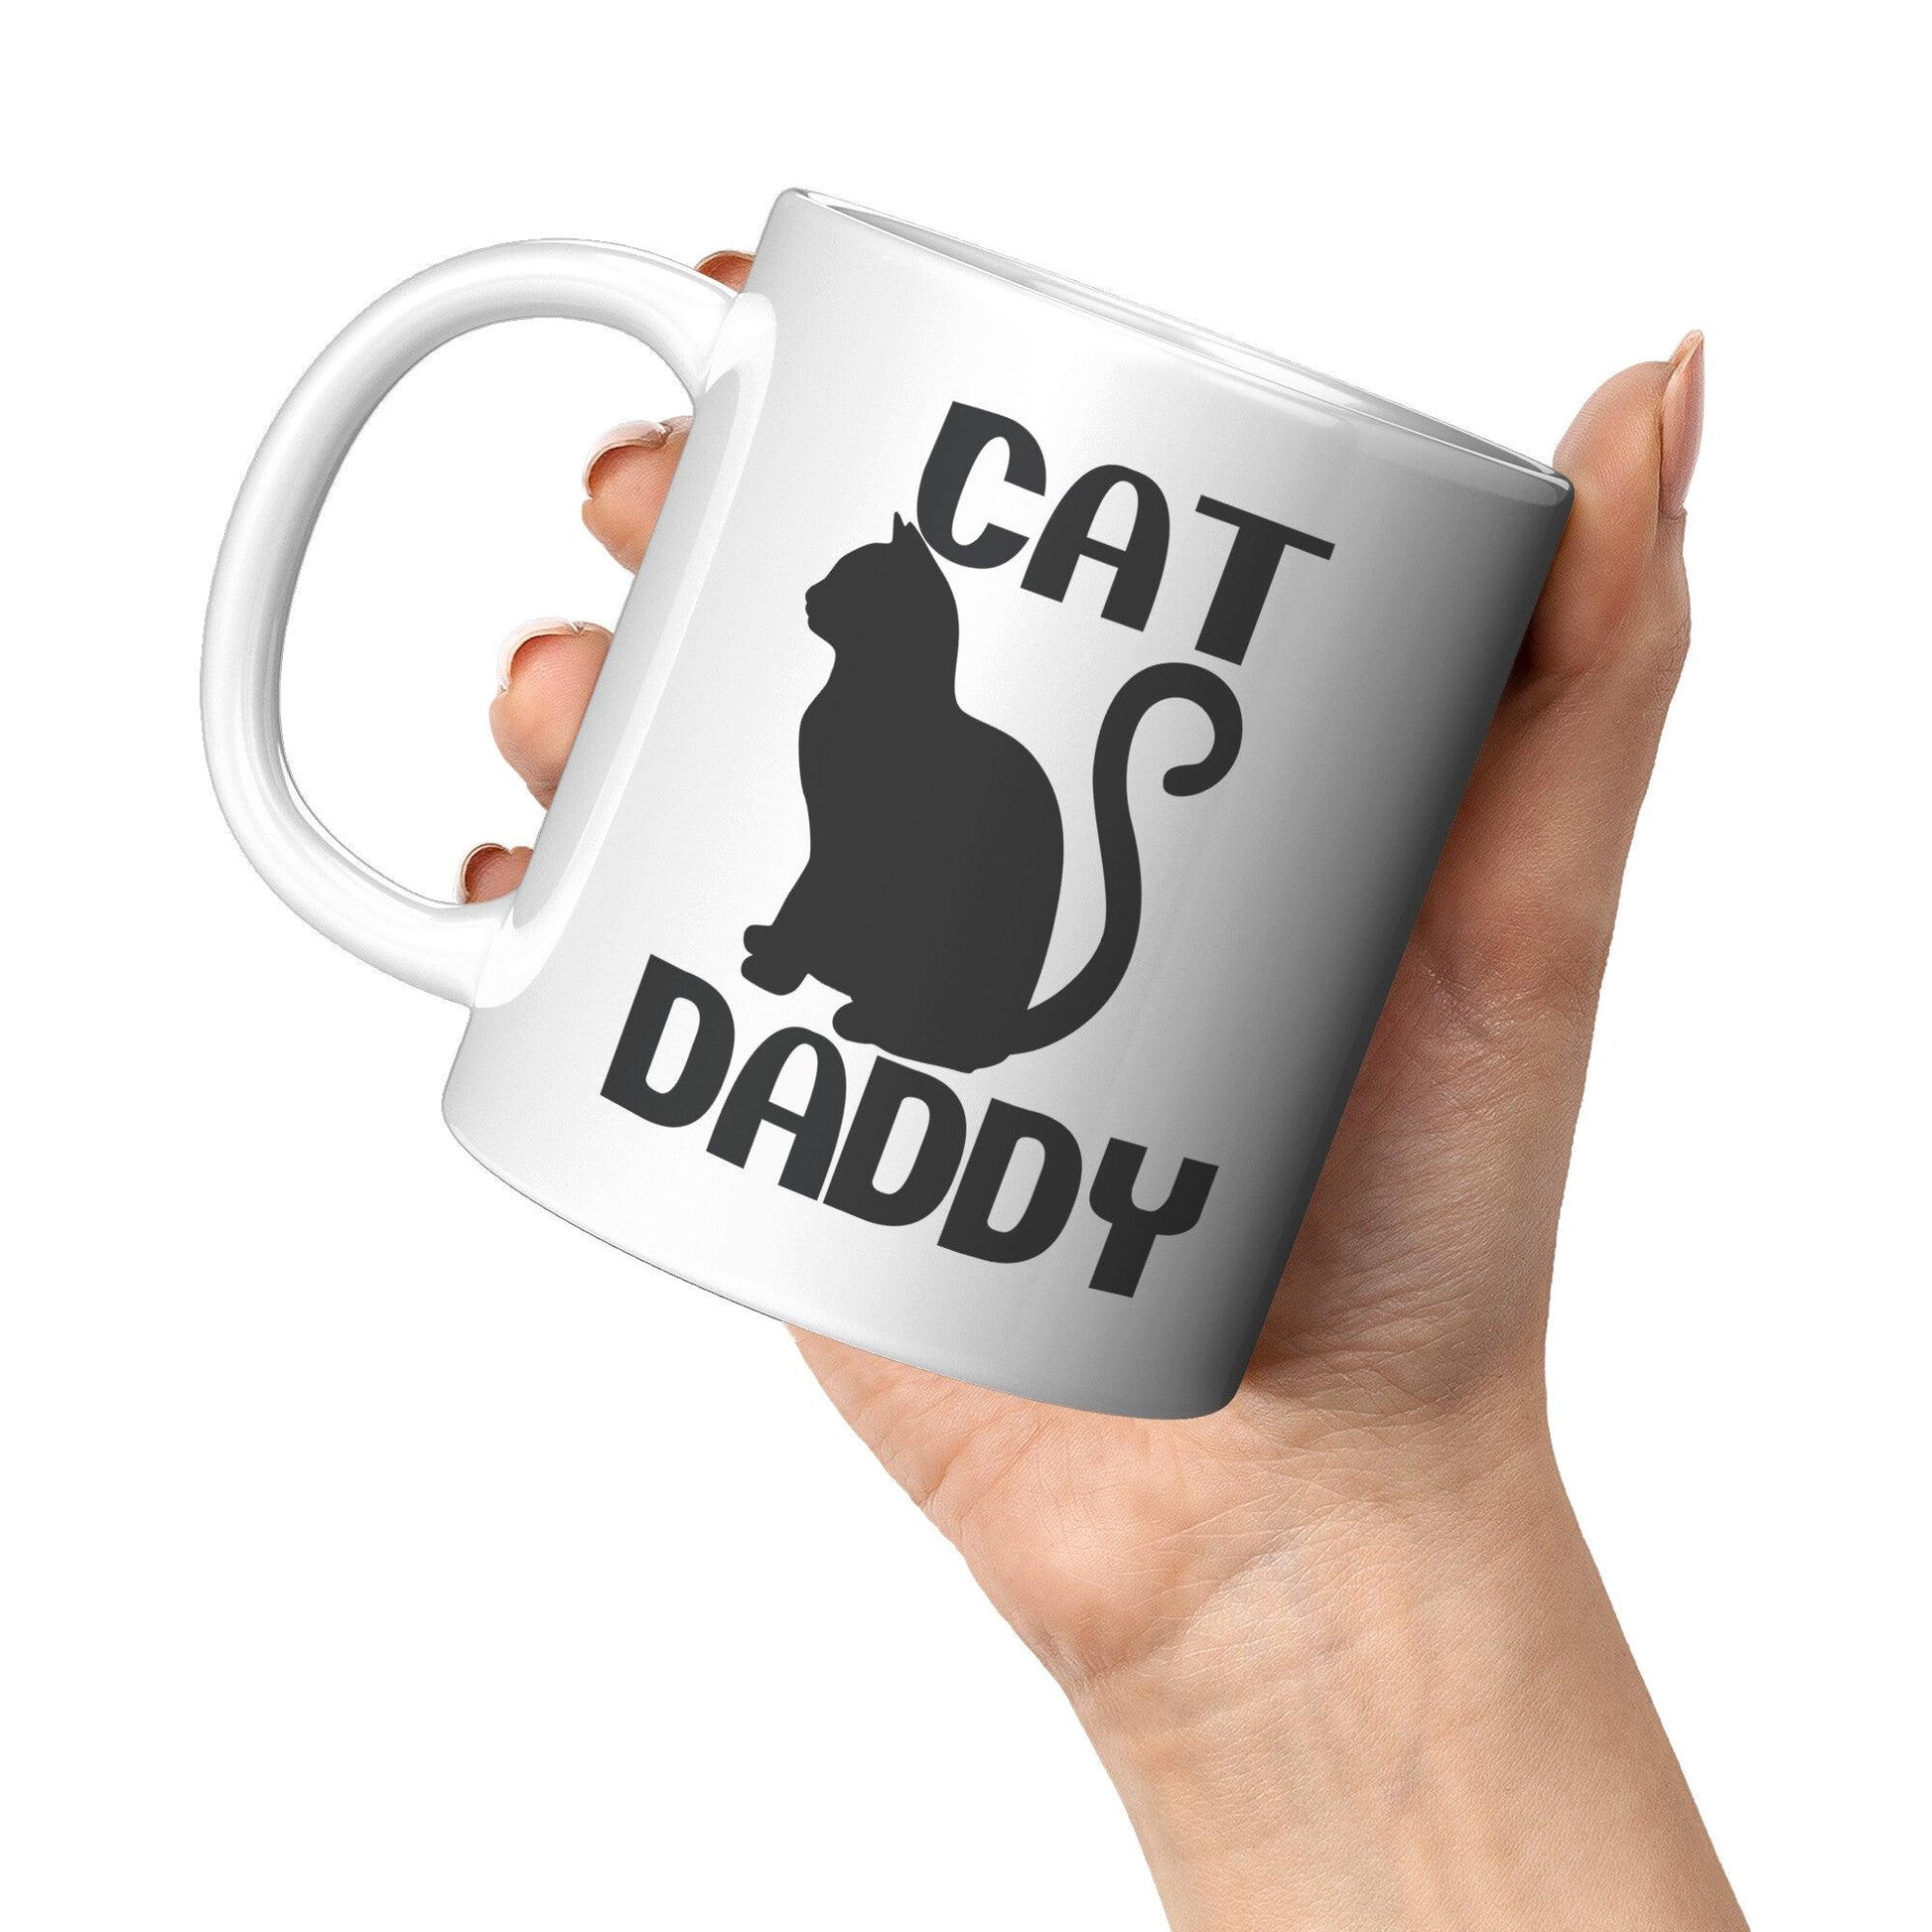 Cat Daddy White Mug - TheGivenGet